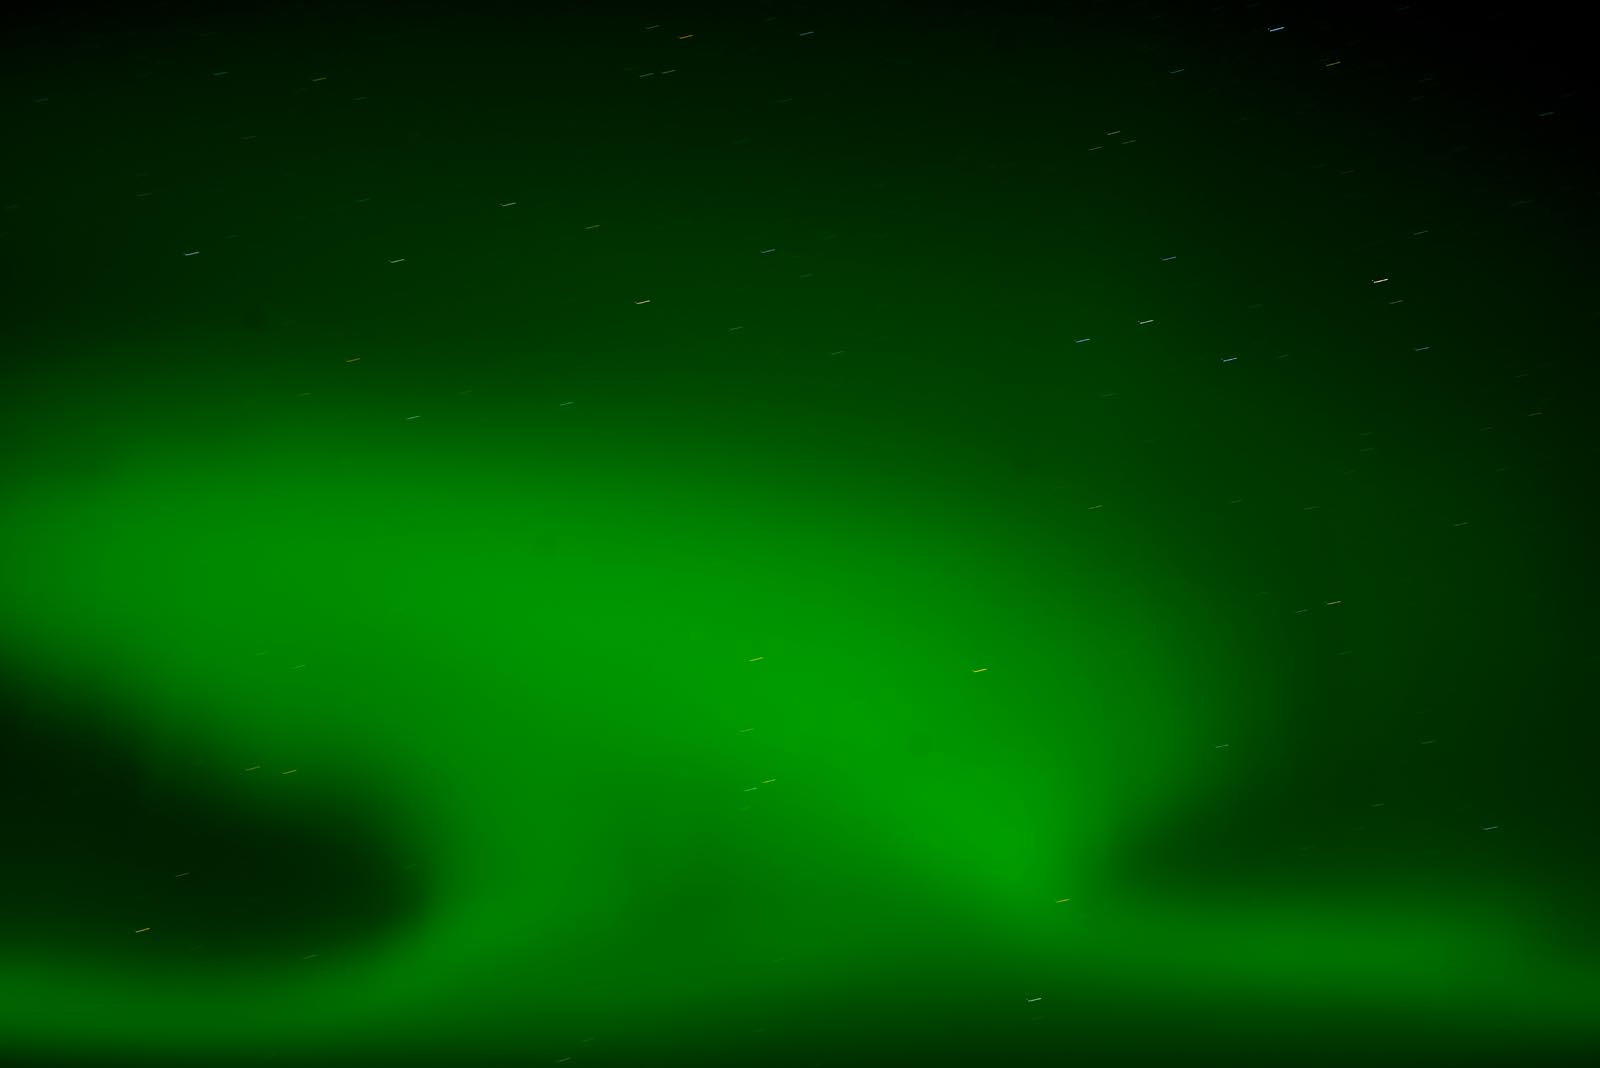 Darkland: Ethereal Greenland at Night (green night)